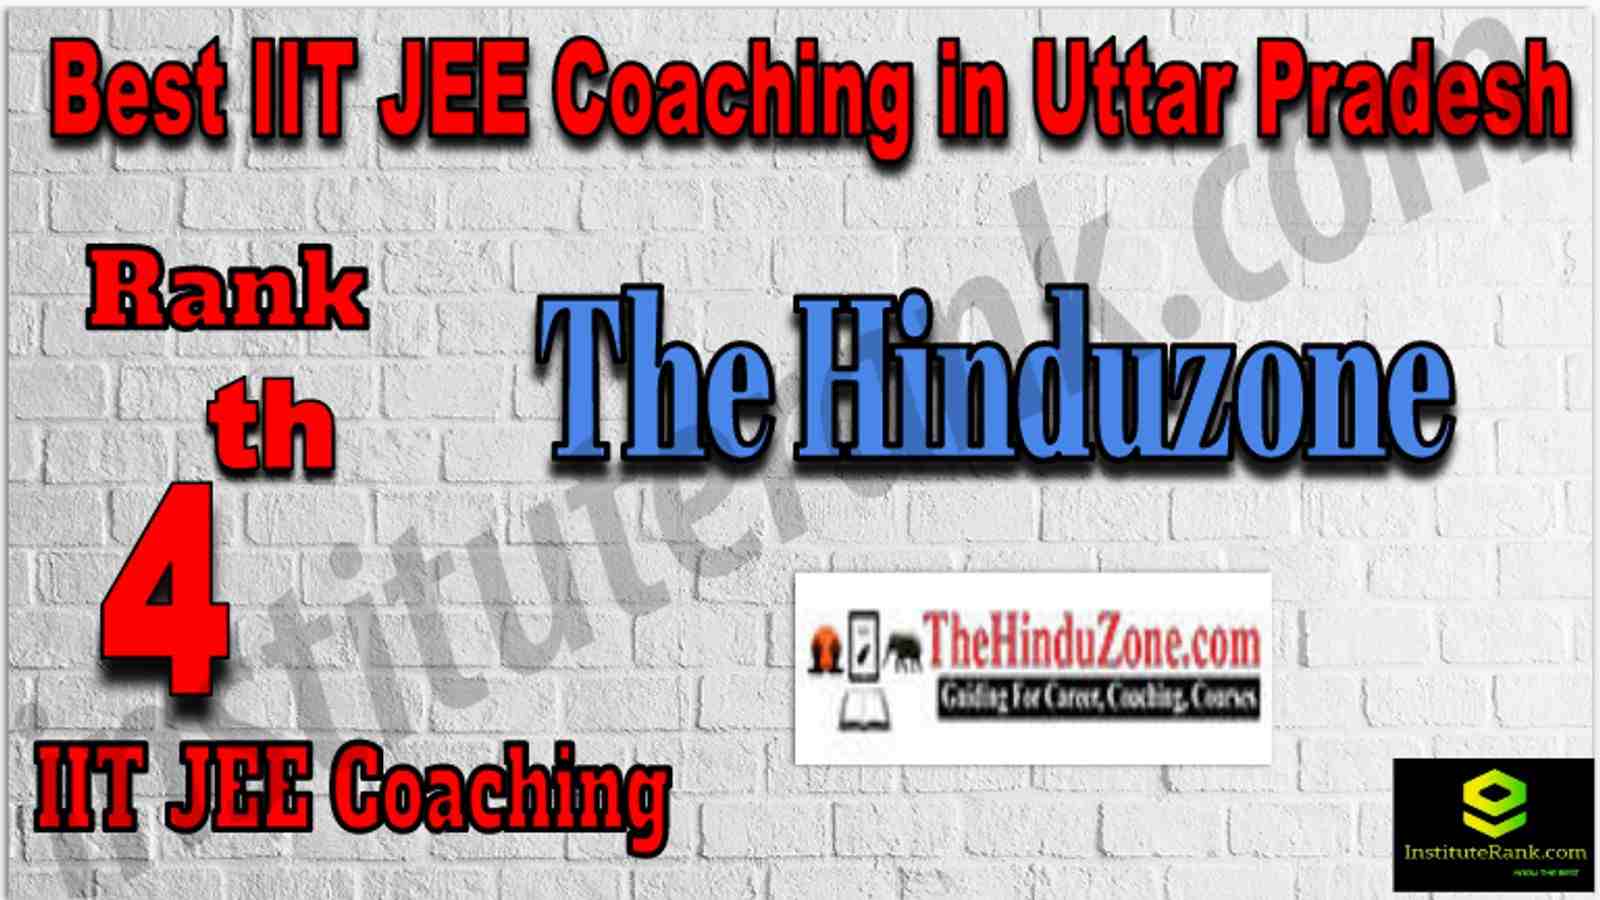 Rank 4th Best IIT JEE Coaching in Uttar Pradesh